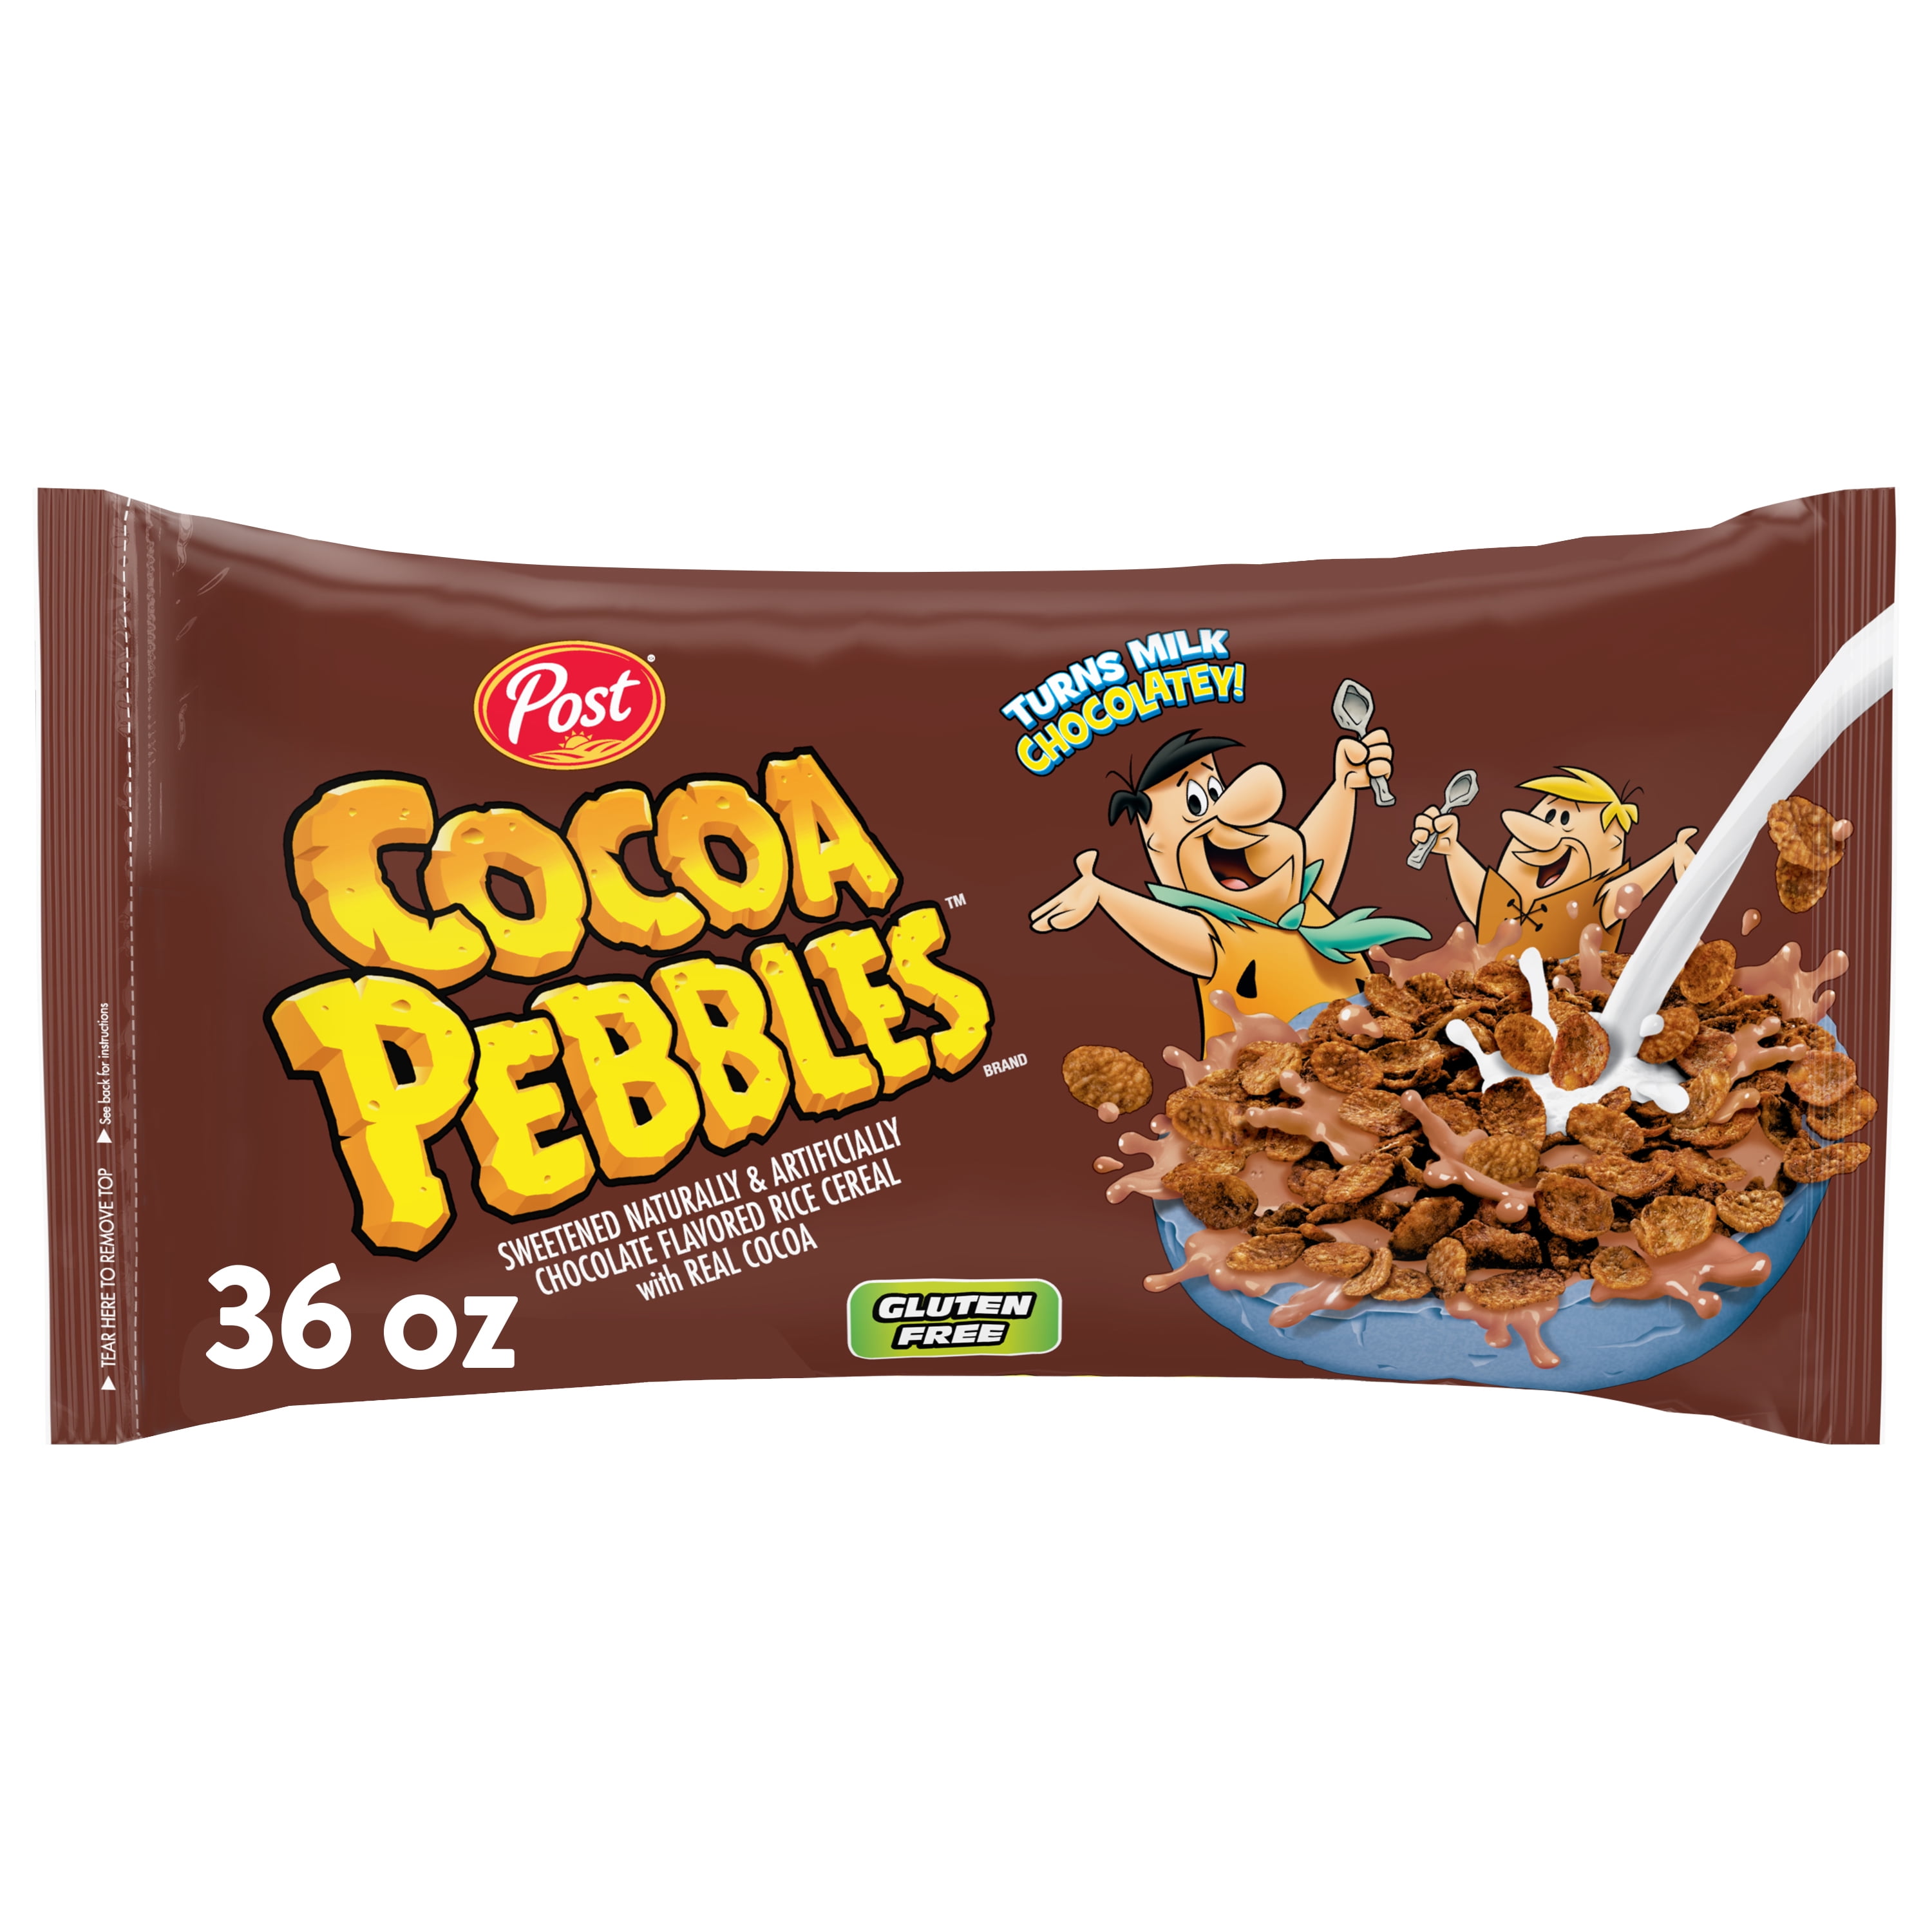 Post Cocoa PEBBLES Breakfast Cereal, Gluten Free, Cocoa Flavored Crispy Rice Cereal, Breakfast Snacks, 36 Oz